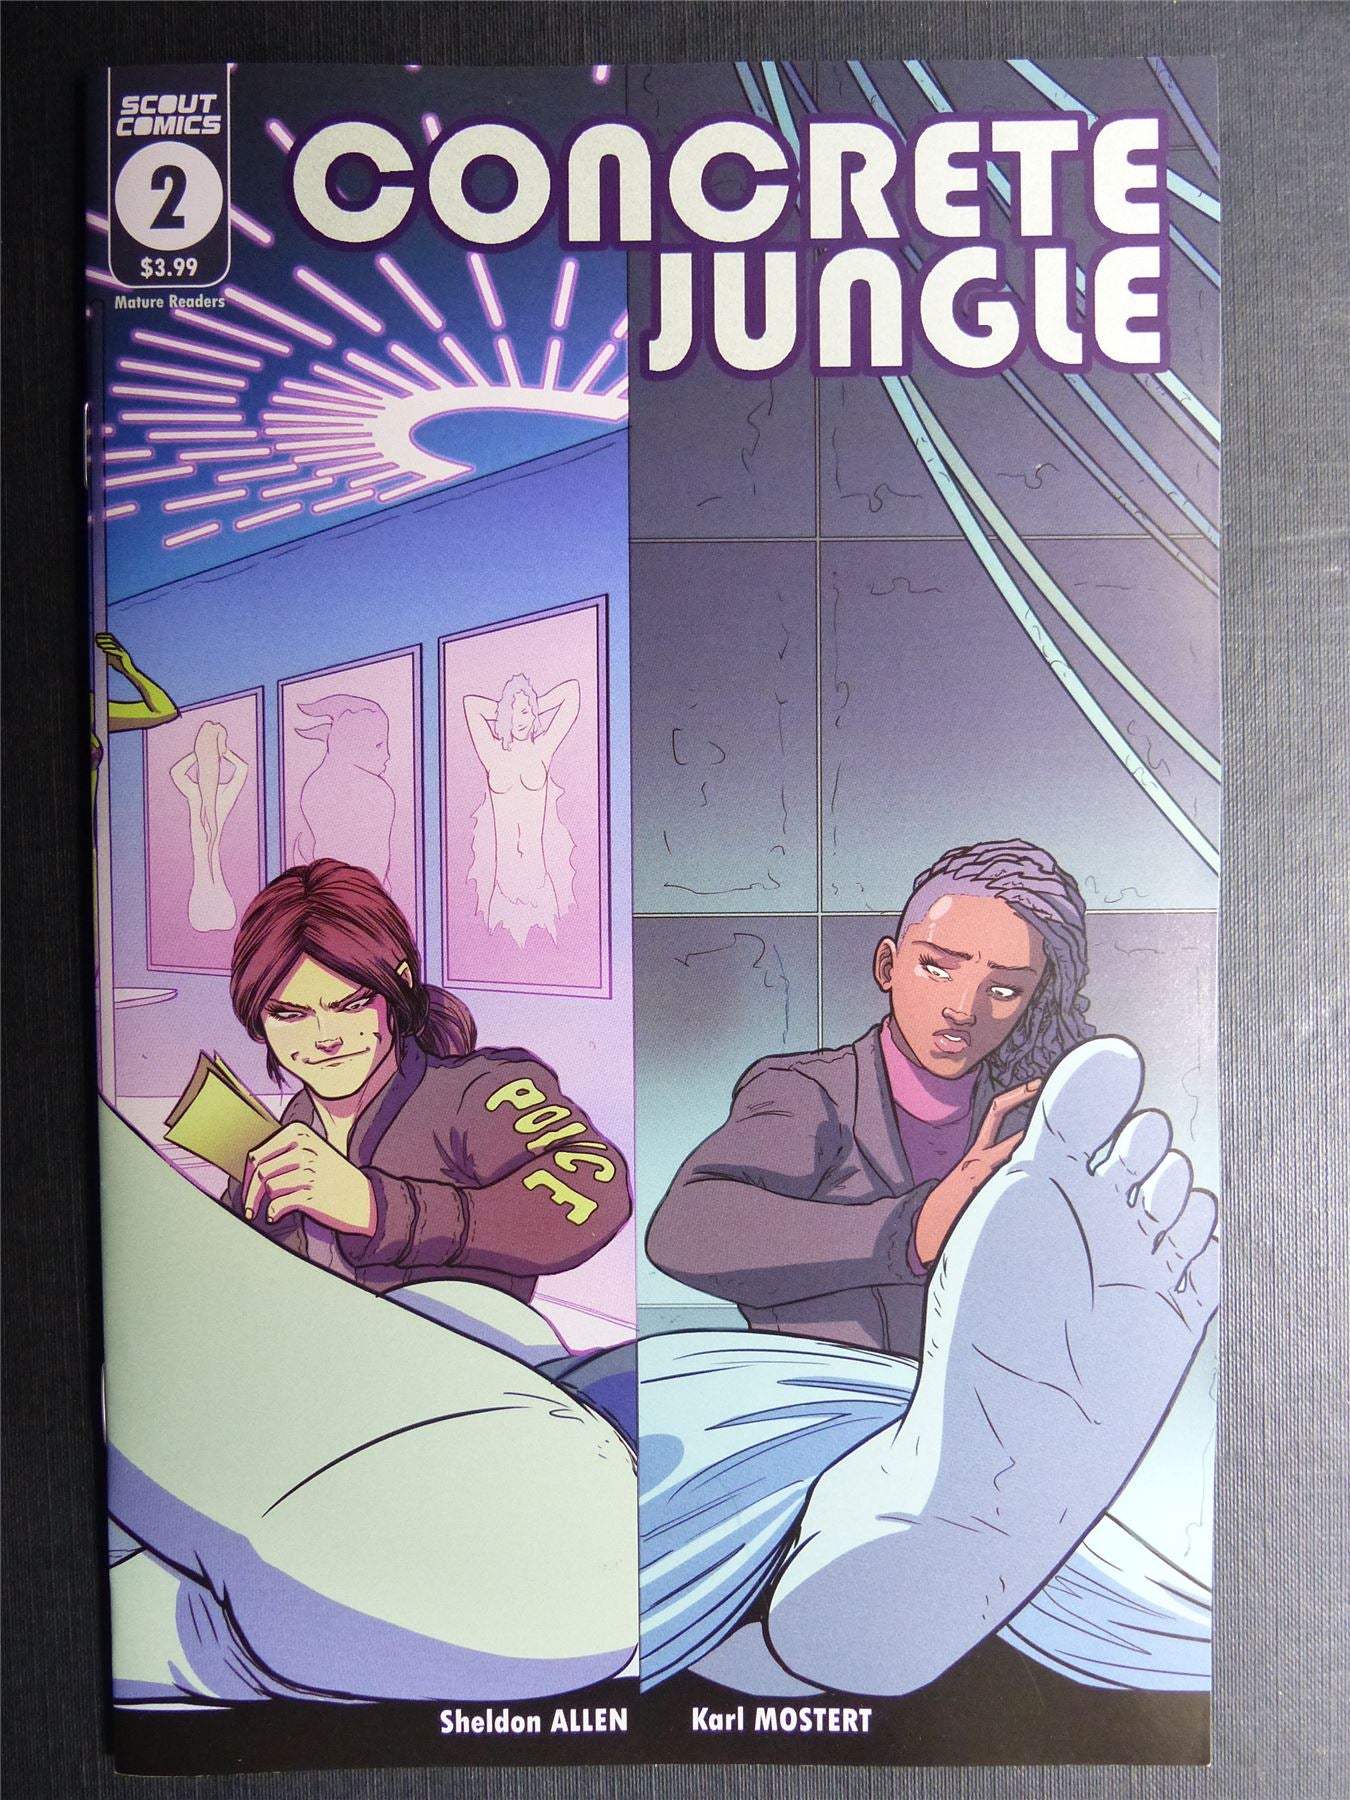 CONCRETE Jungle #2 - Nov 2020 - Scout Comics #1K